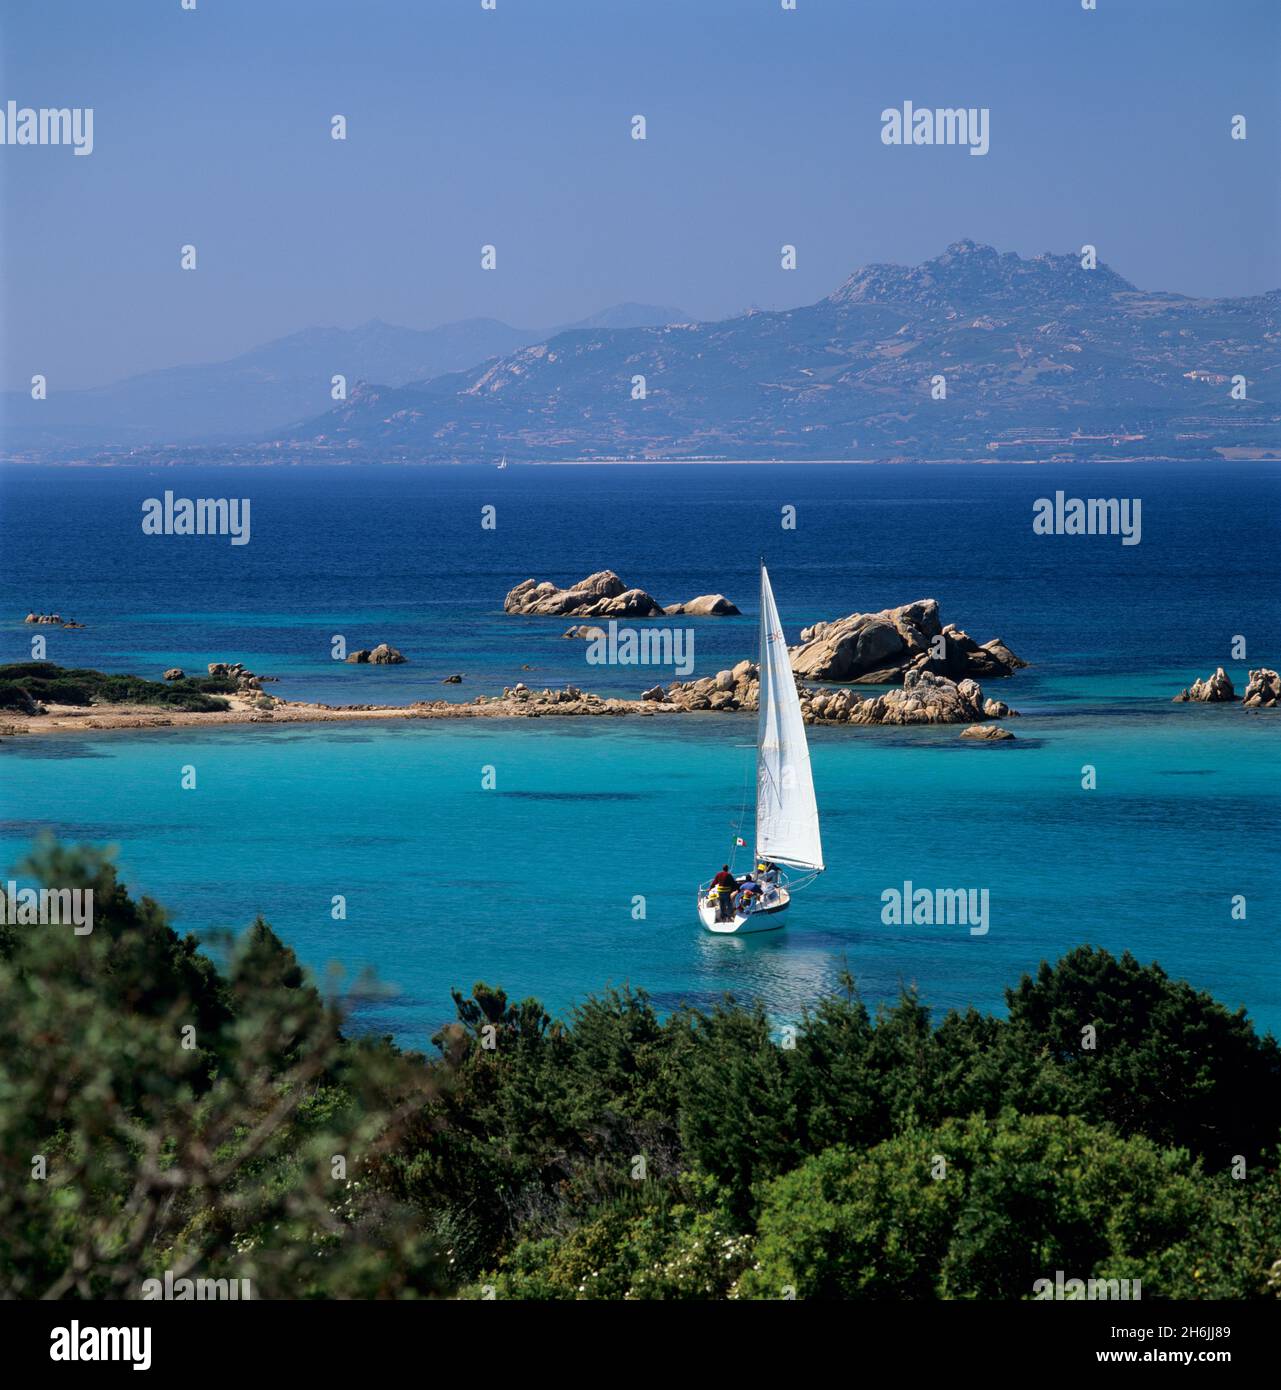 Yacht sailing on the Golfo di Arzachena, Costa Smeralda, Sardinia, Italy, Mediterranean, Europe Stock Photo